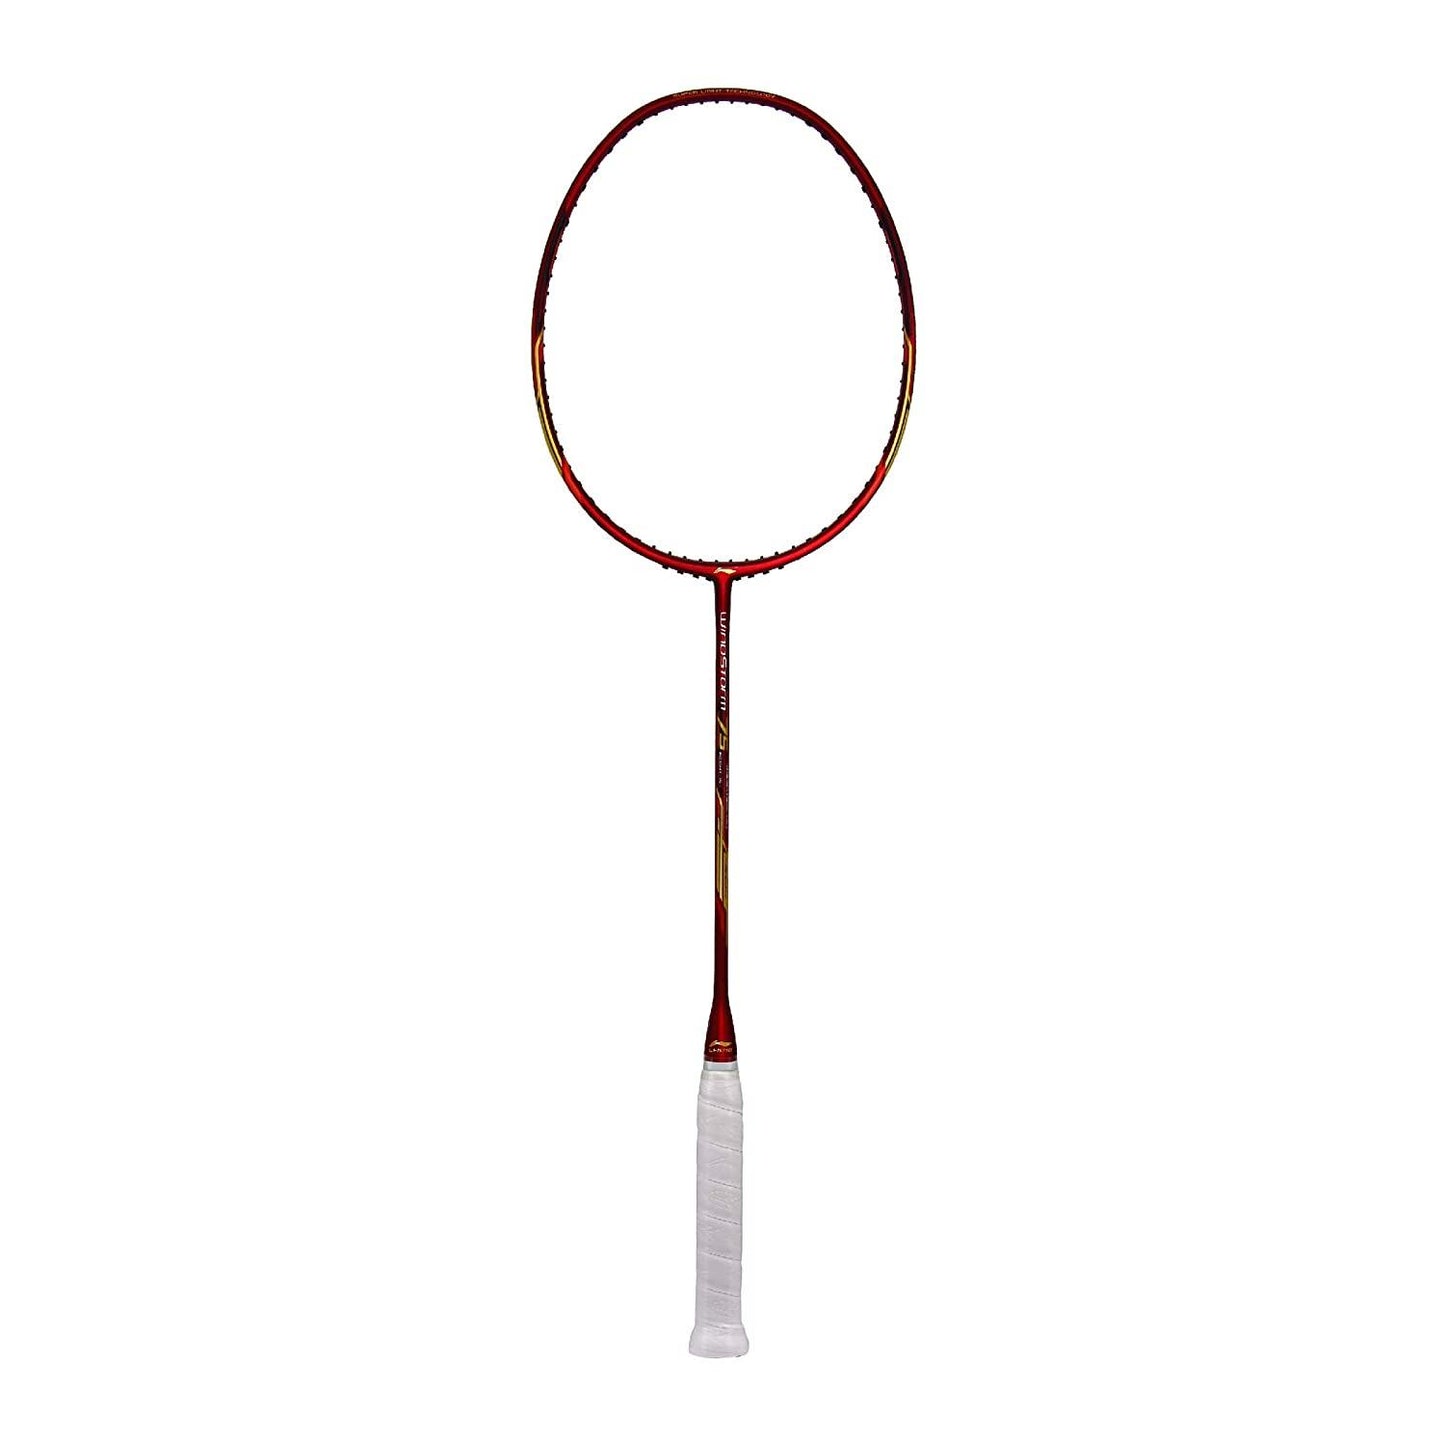 Li-Ning Windstorm 75 Carbon-Fiber Badminton Racquet Unstrung Red/Gold - Best Price online Prokicksports.com